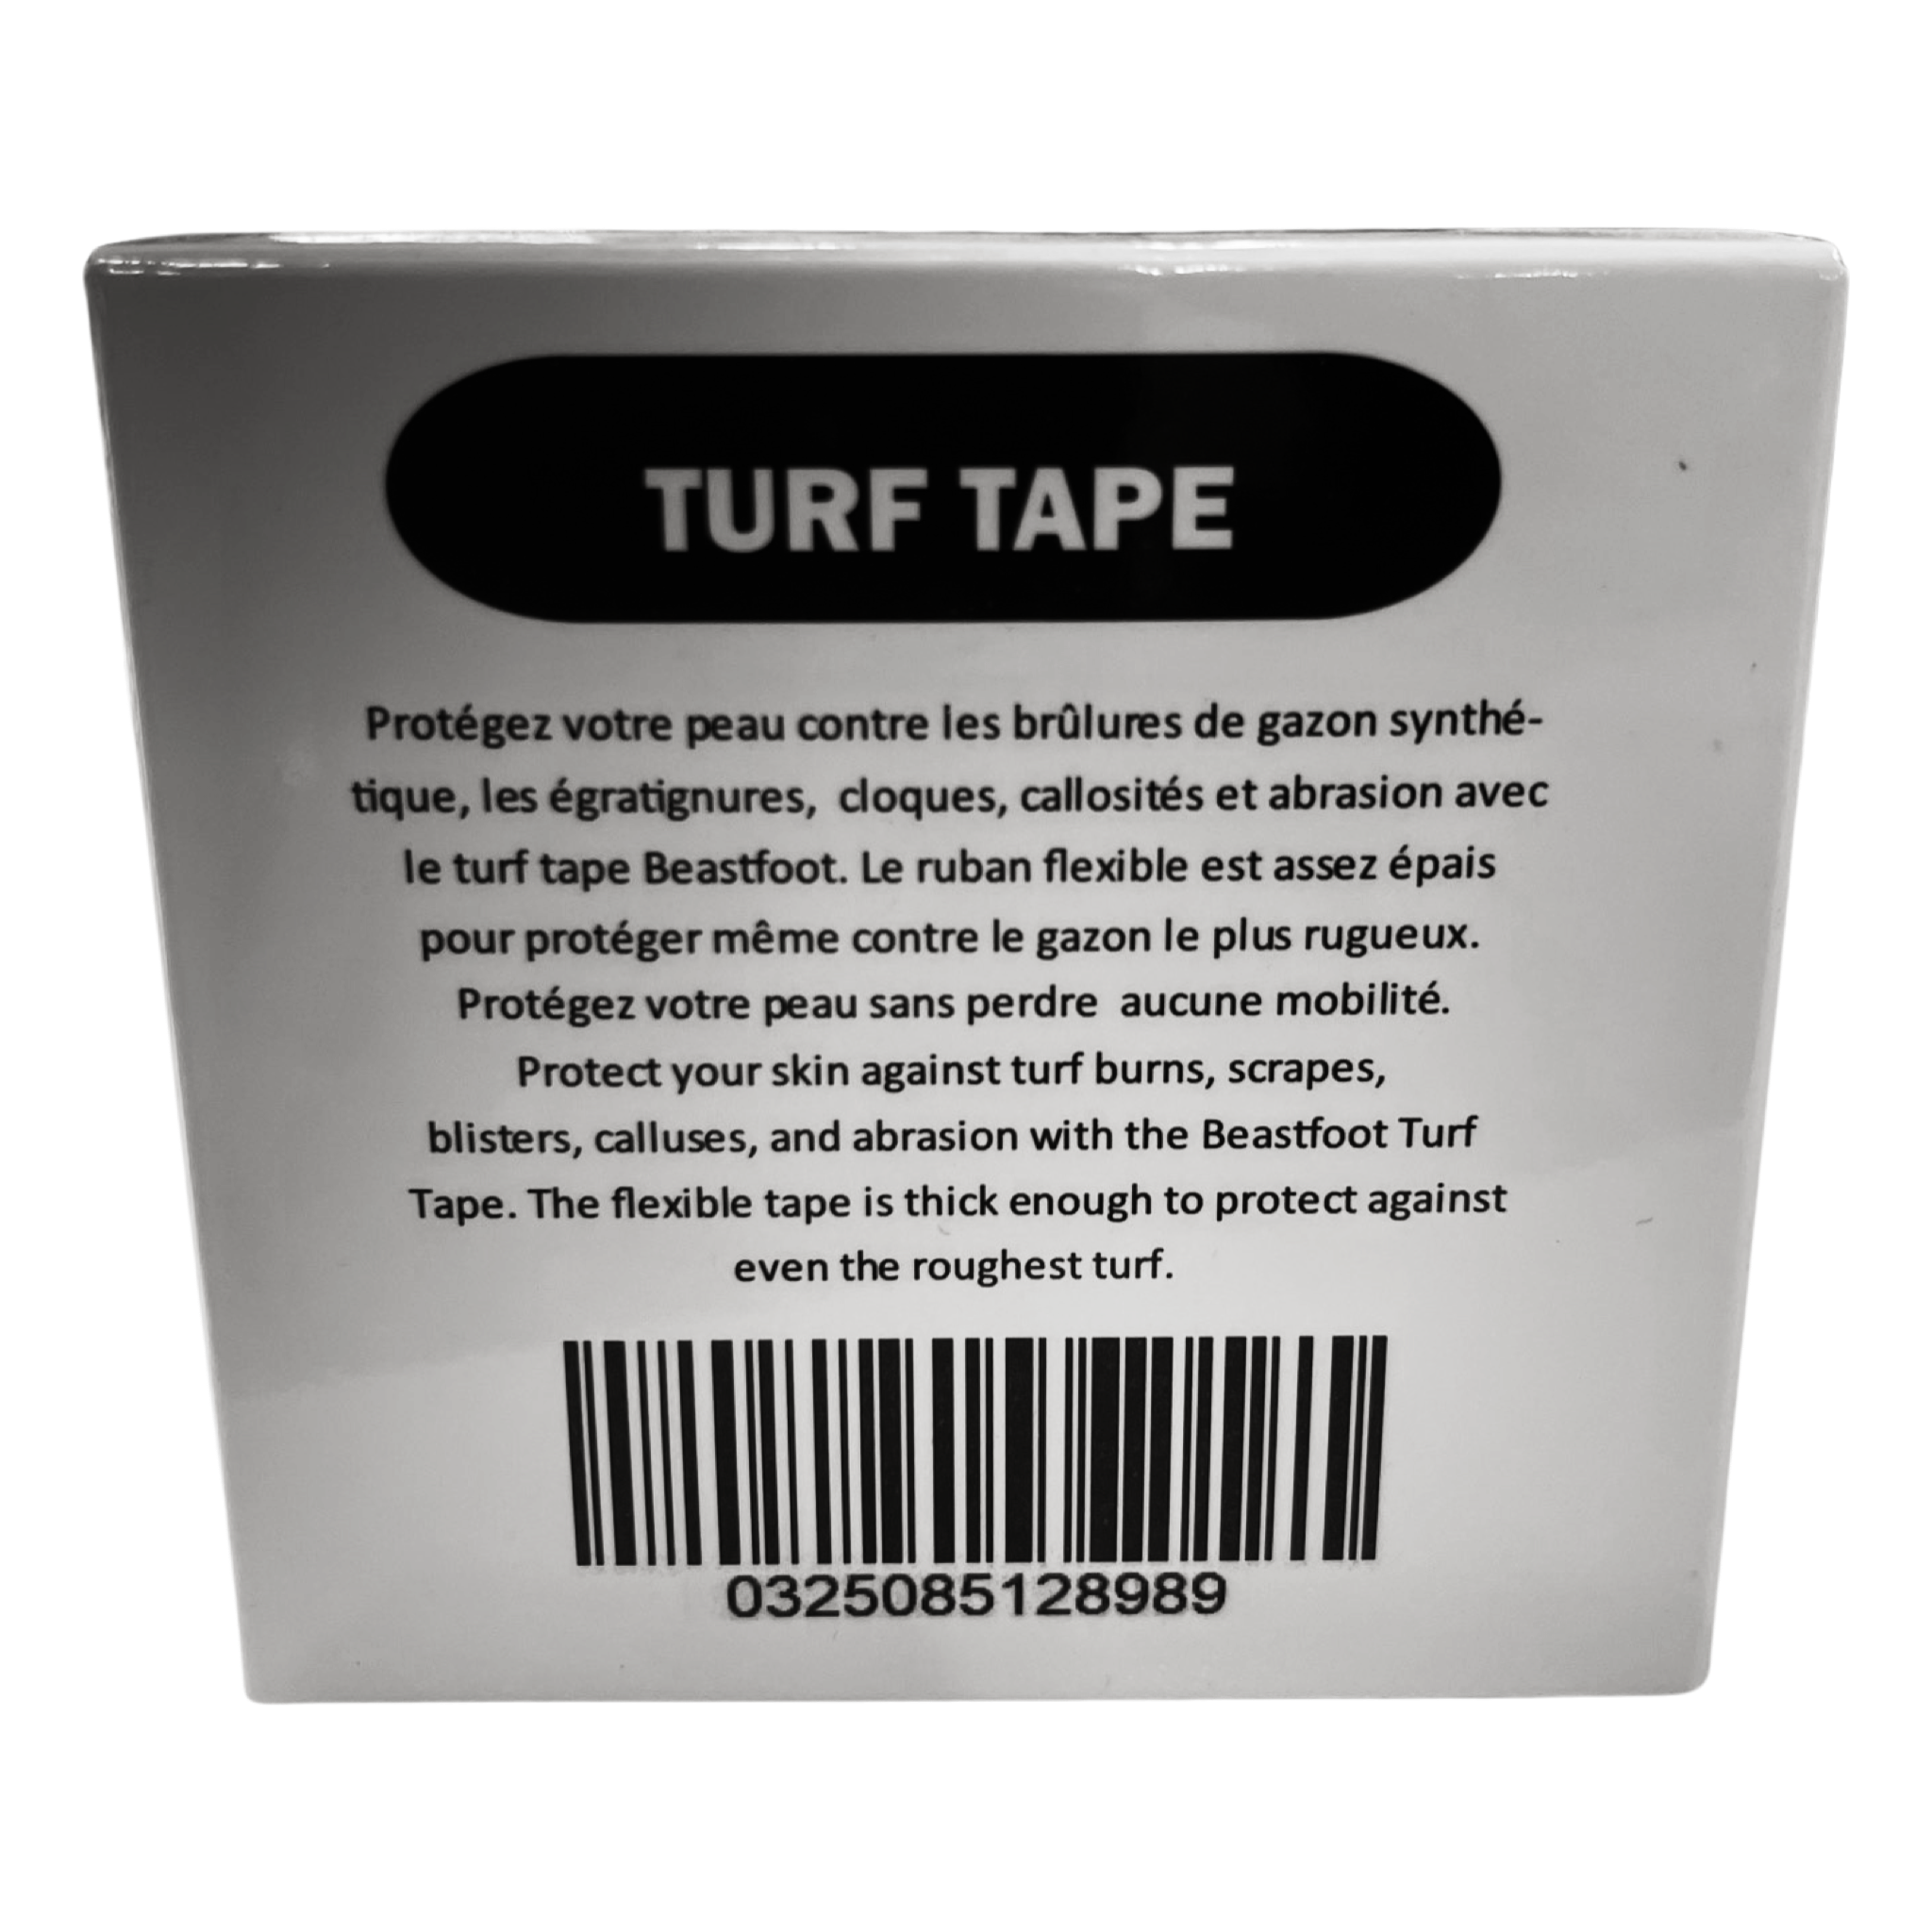 Beastfoot Turf tape - Ruban Protecteur gazon synthétique